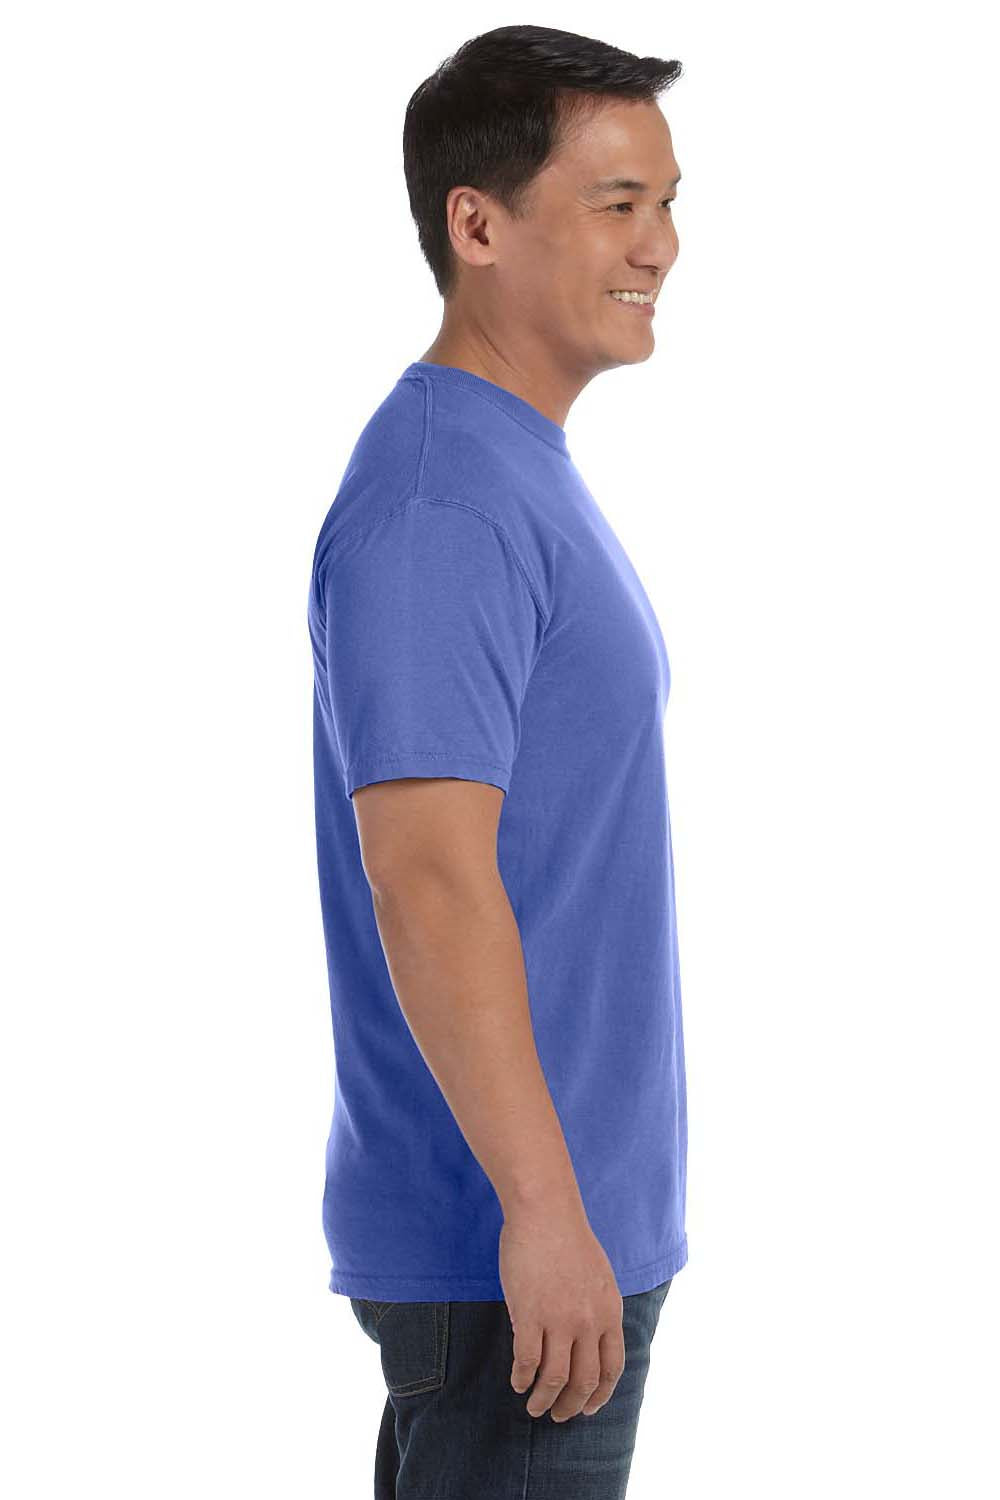 Comfort Colors C1717 Mens Short Sleeve Crewneck T-Shirt Periwinkle Blue Side